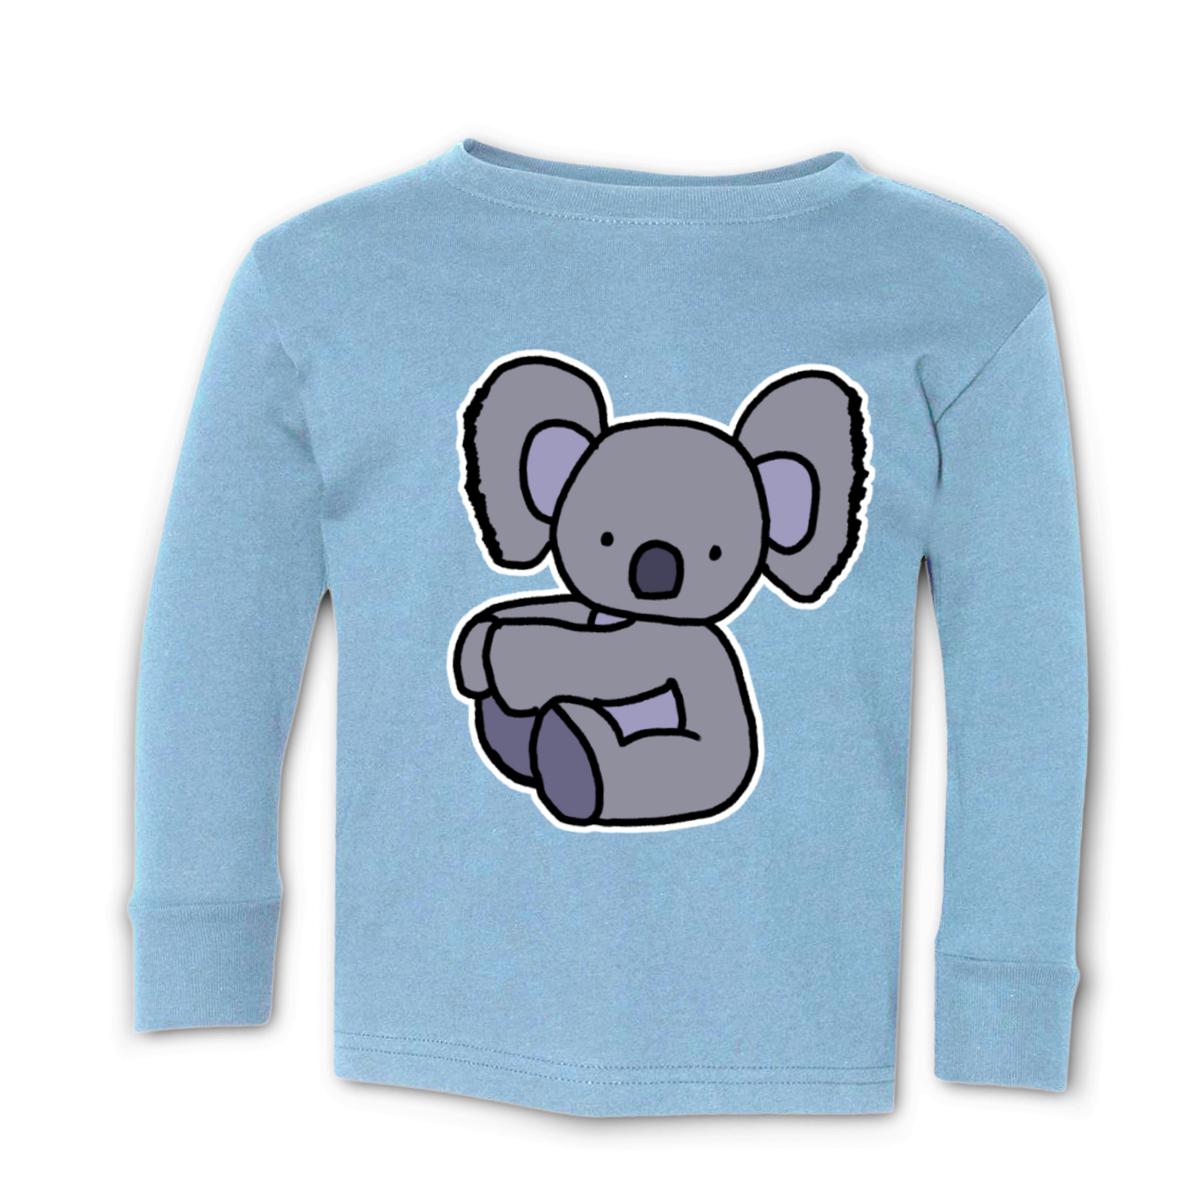 Toy Koala Kid's Long Sleeve Tee Small light-blue